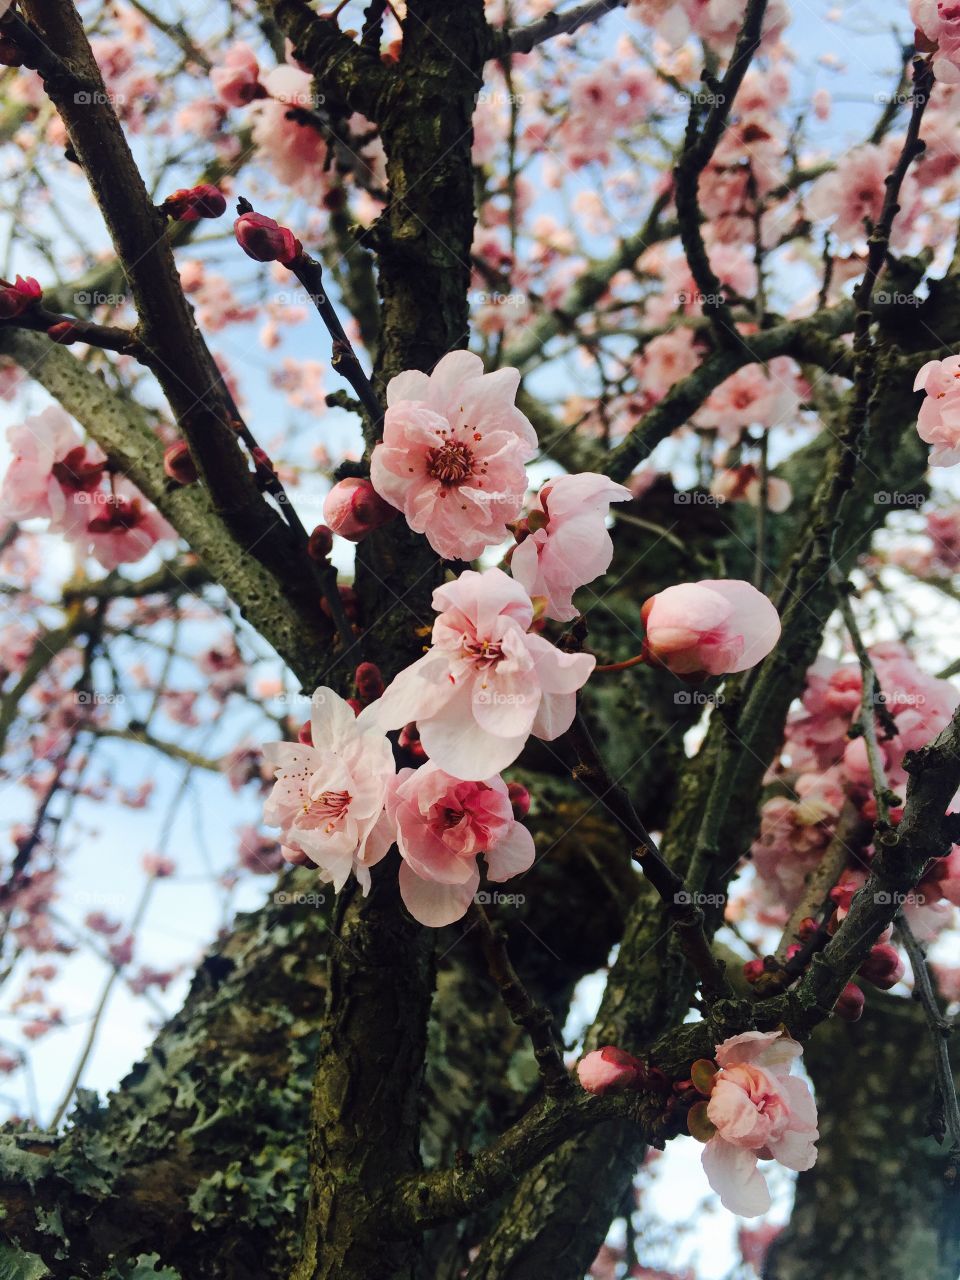 #cherry blossoms